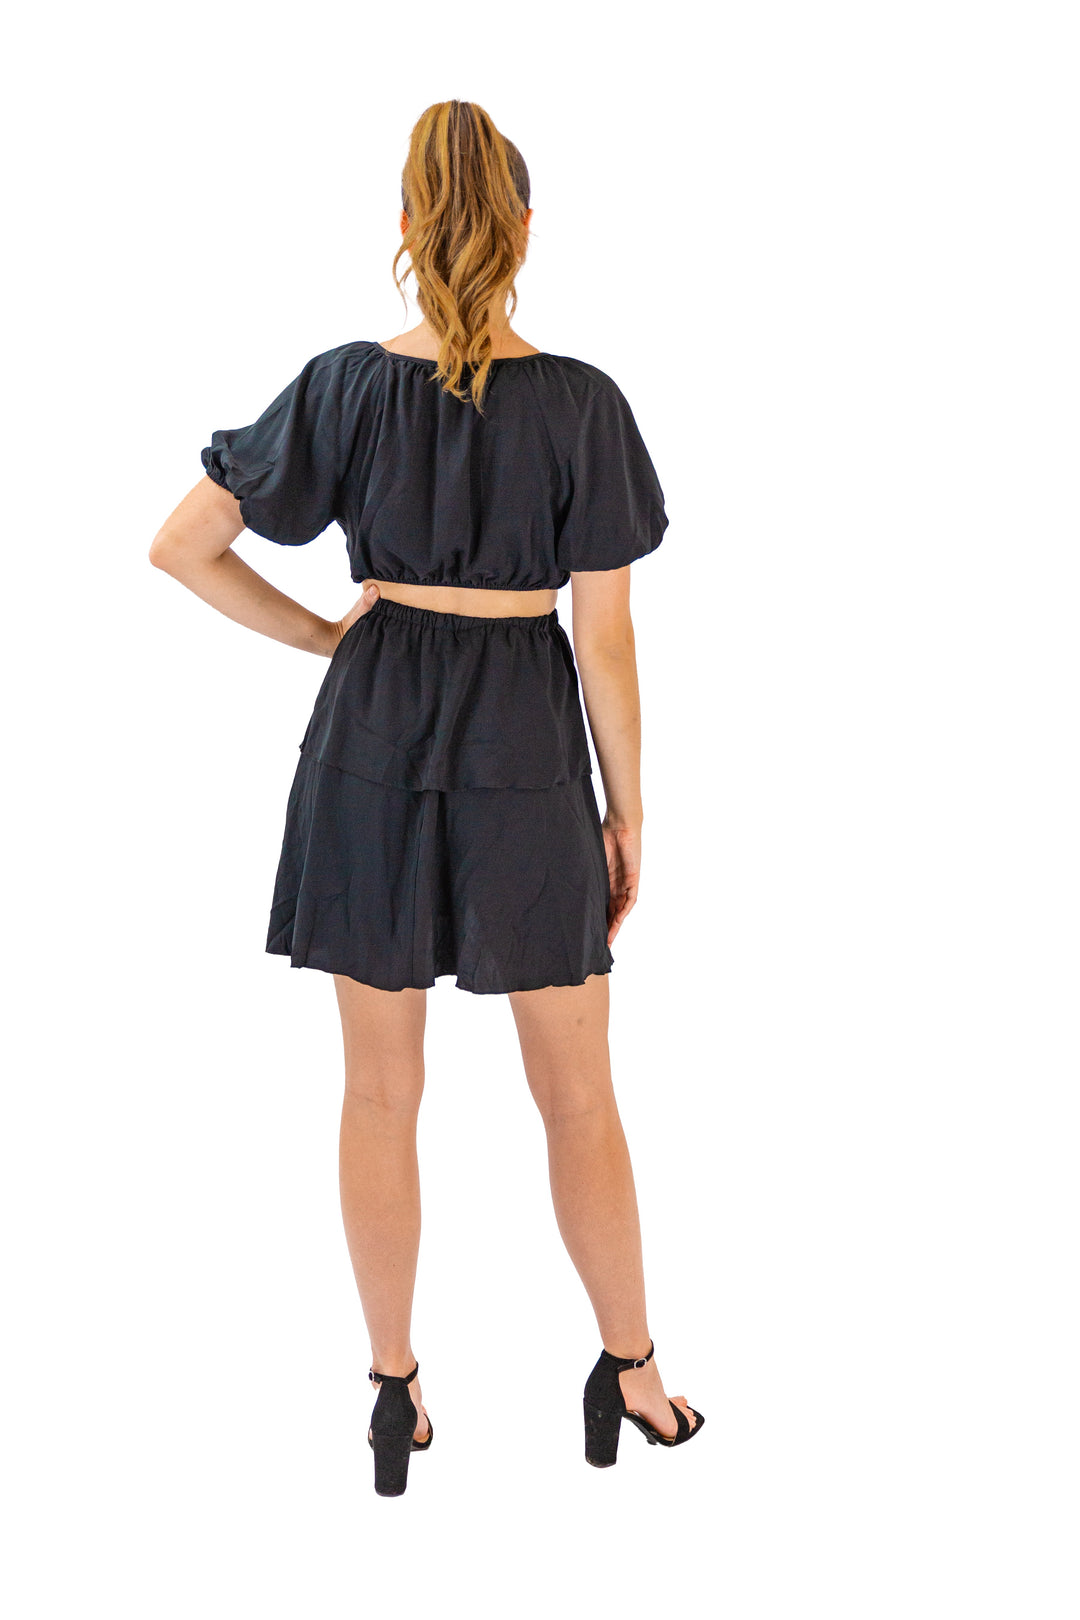 Black V-neck Dress With Sleek Cutout Sleeves